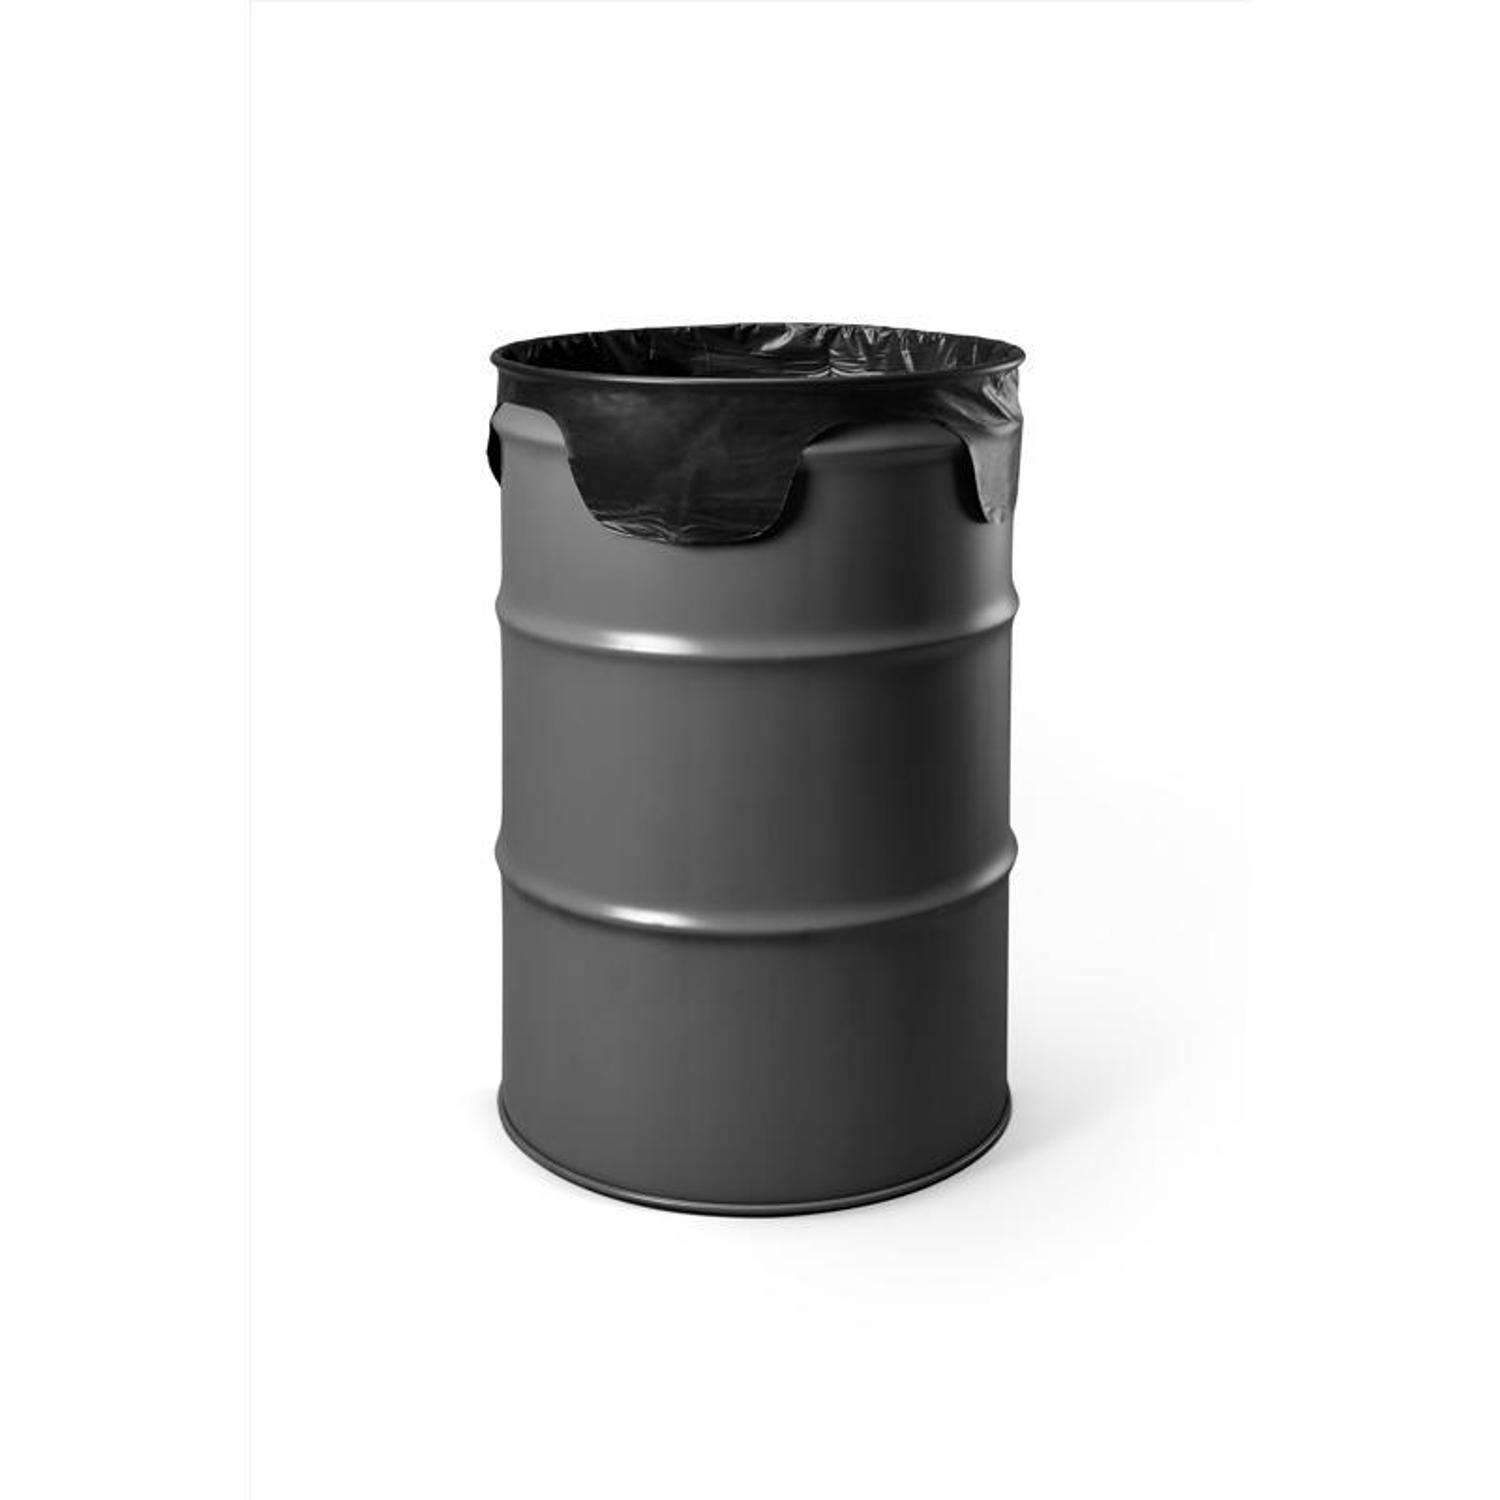 Mini Oil Drum - a Simple Desktop Oil Drum, Desk Organizer or Candy Hol